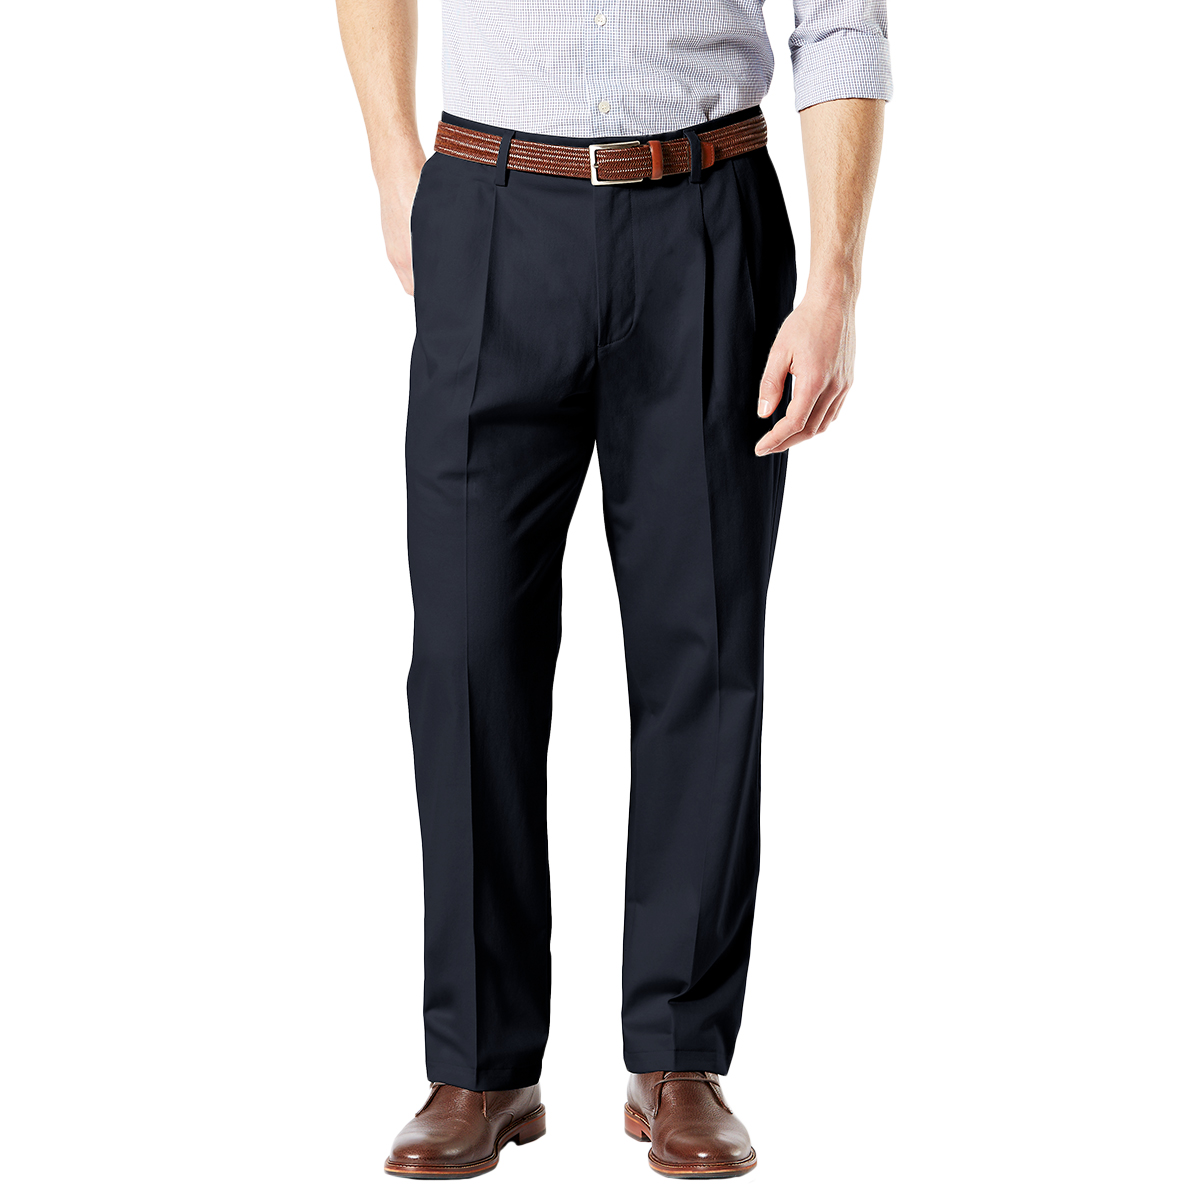 Dockers Men's Classic Fit Signature Khaki 2.0 Stretch Pleated Crease Pants